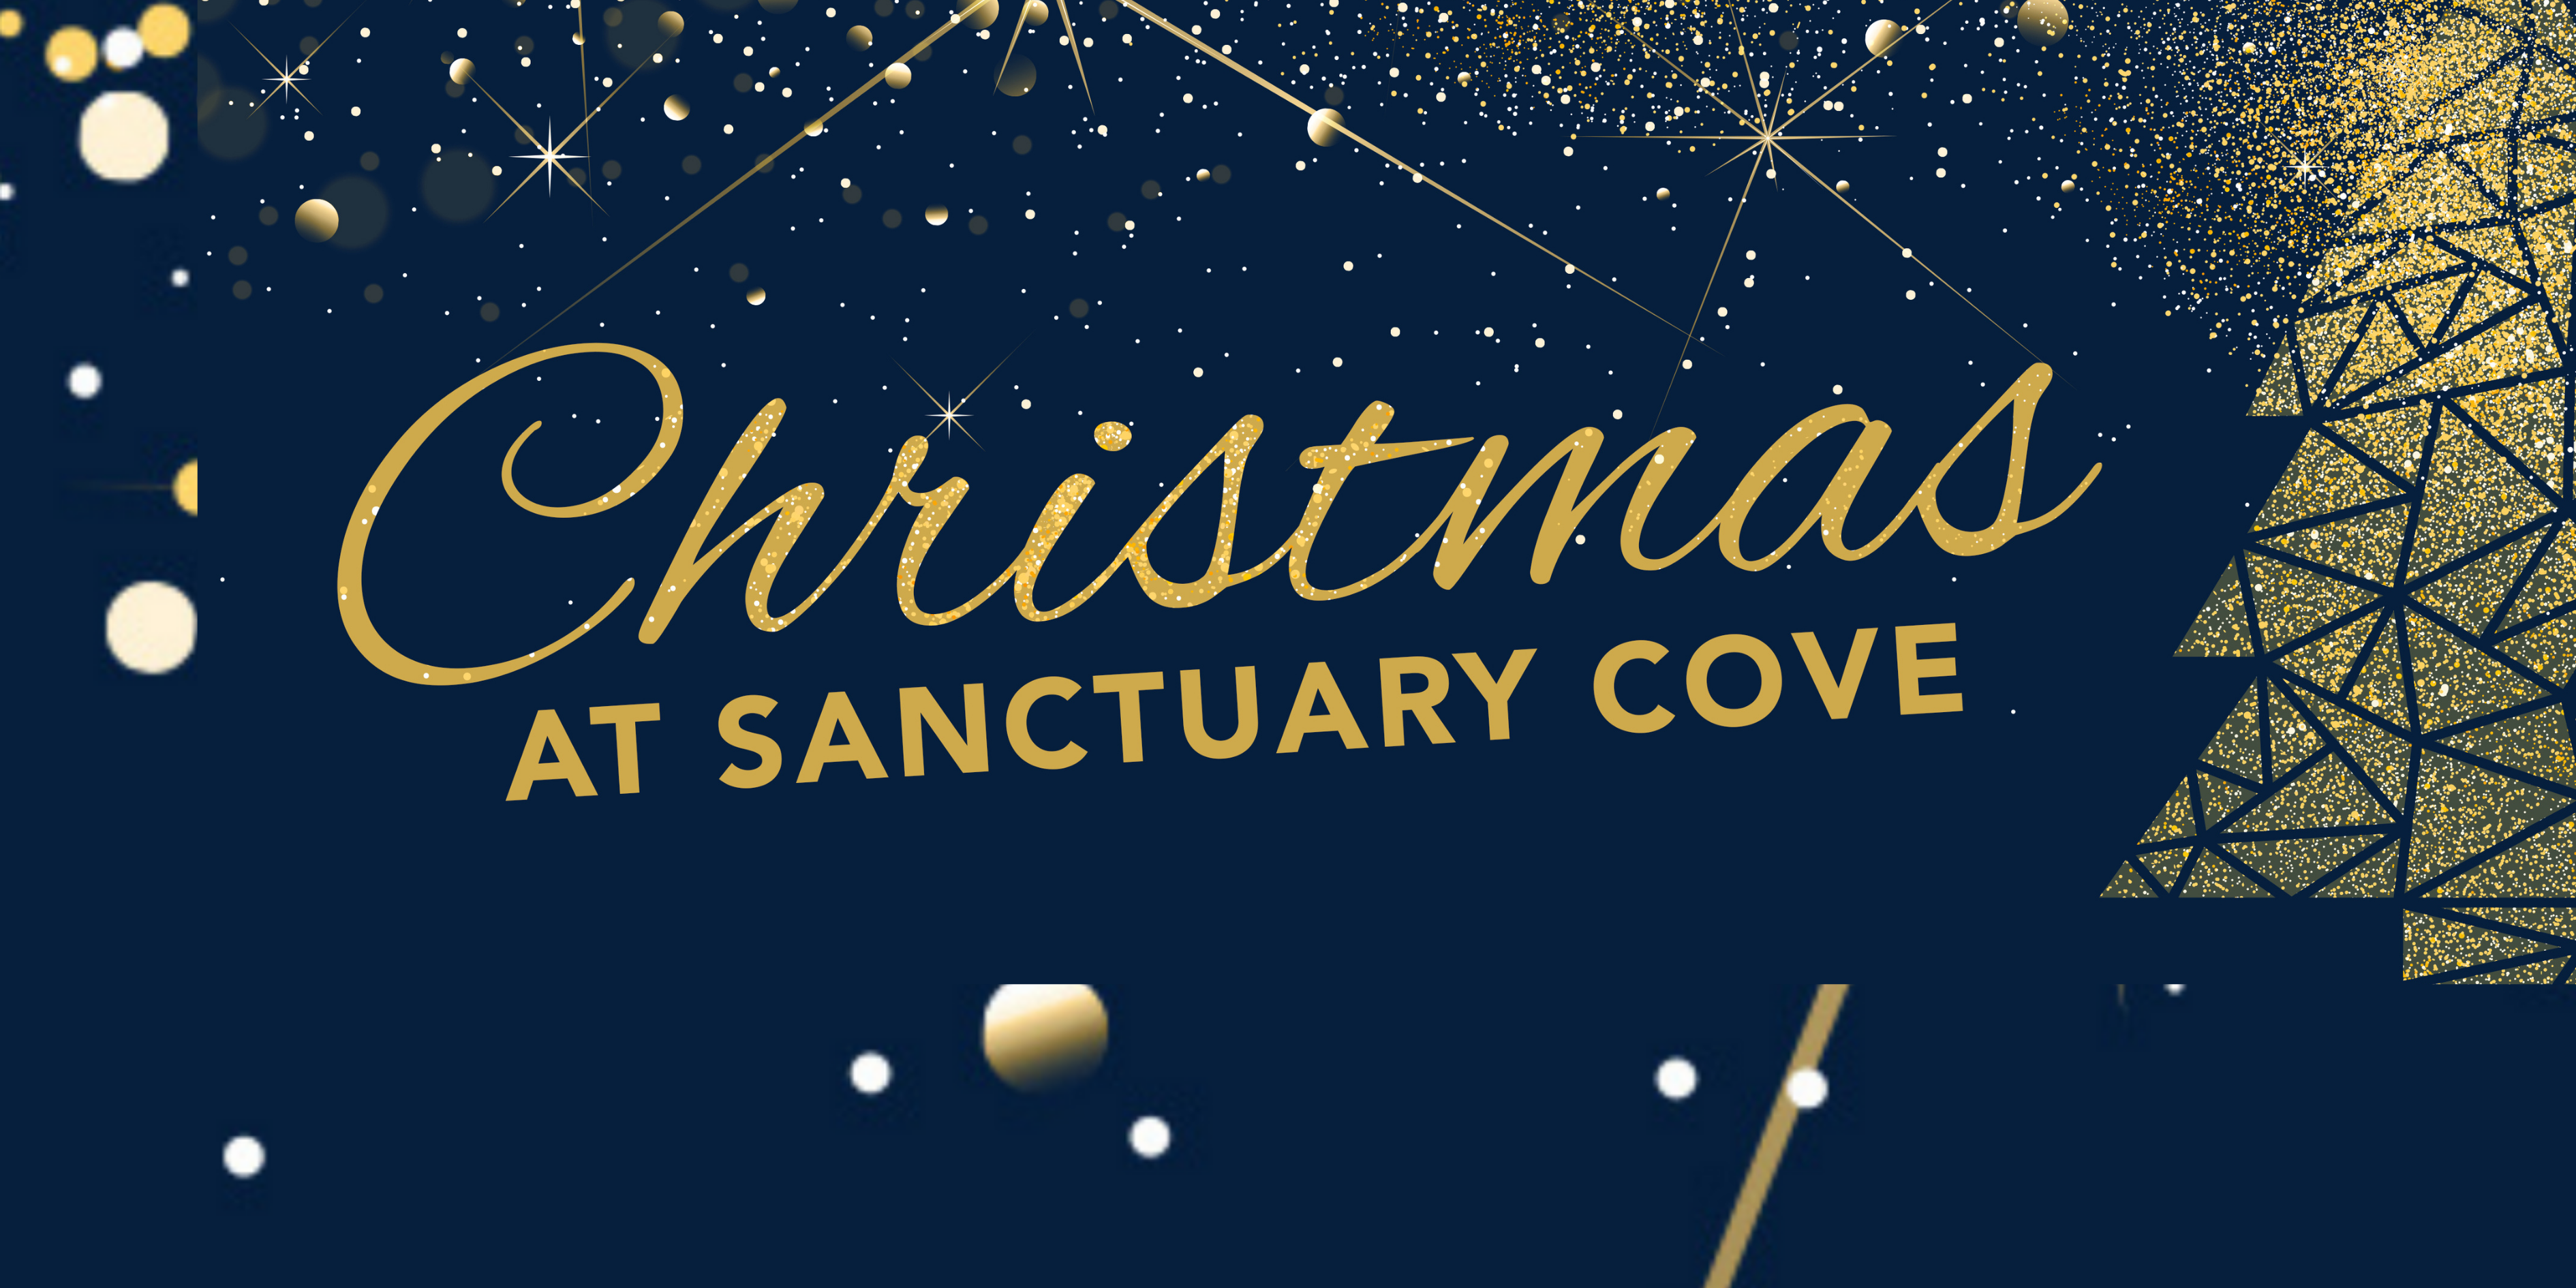 Celebrate Christmas at Sanctuary Cove